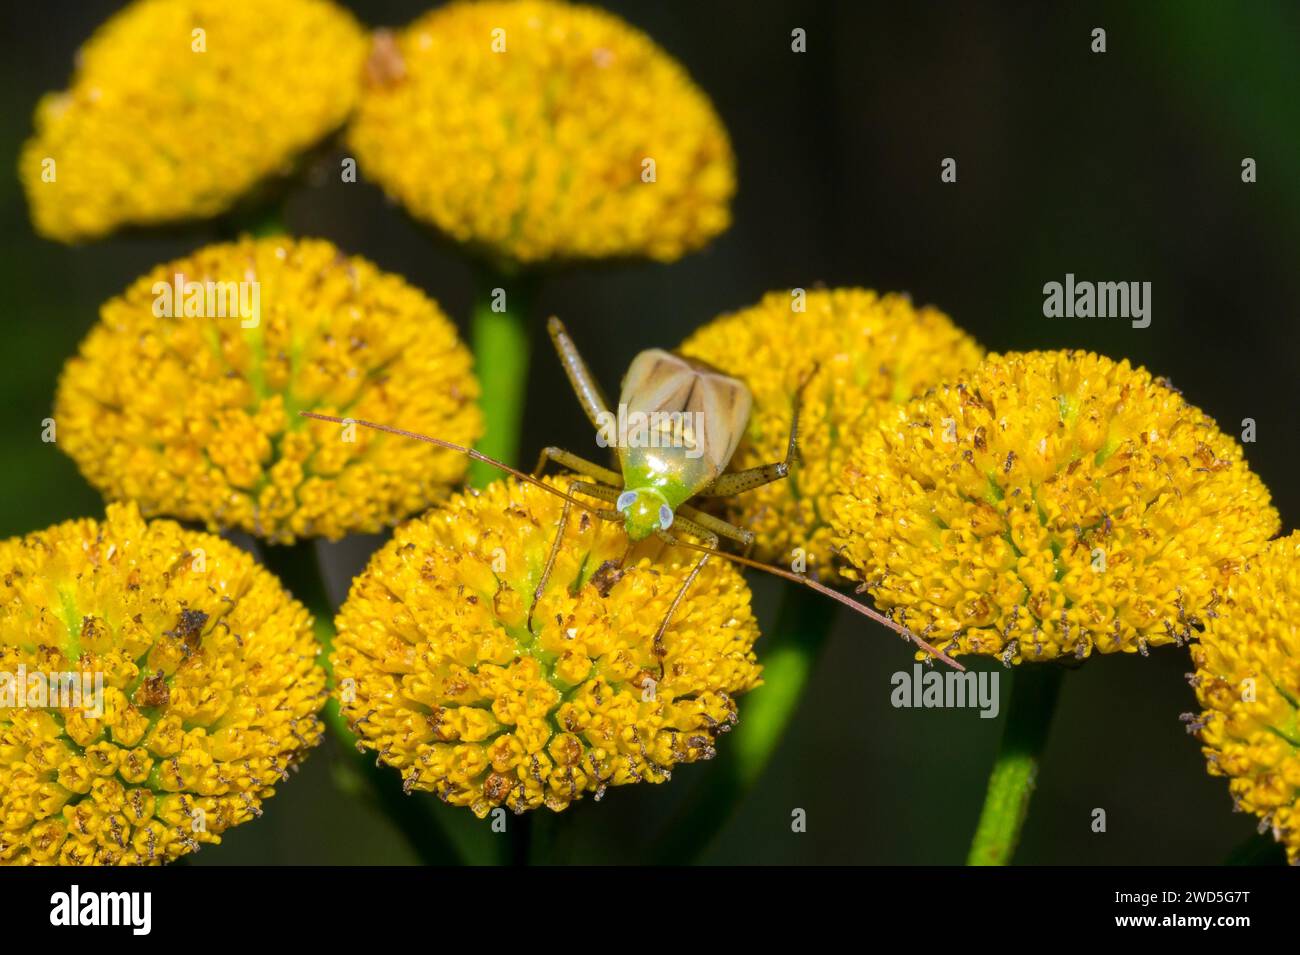 Alfalfa plant bug (Adelphocoris lineolatus), female, on yellow flowers of tansy (Tanacetum vulgare L.) (syn.: Chrysanthemum vulgare) or wormwood Stock Photo